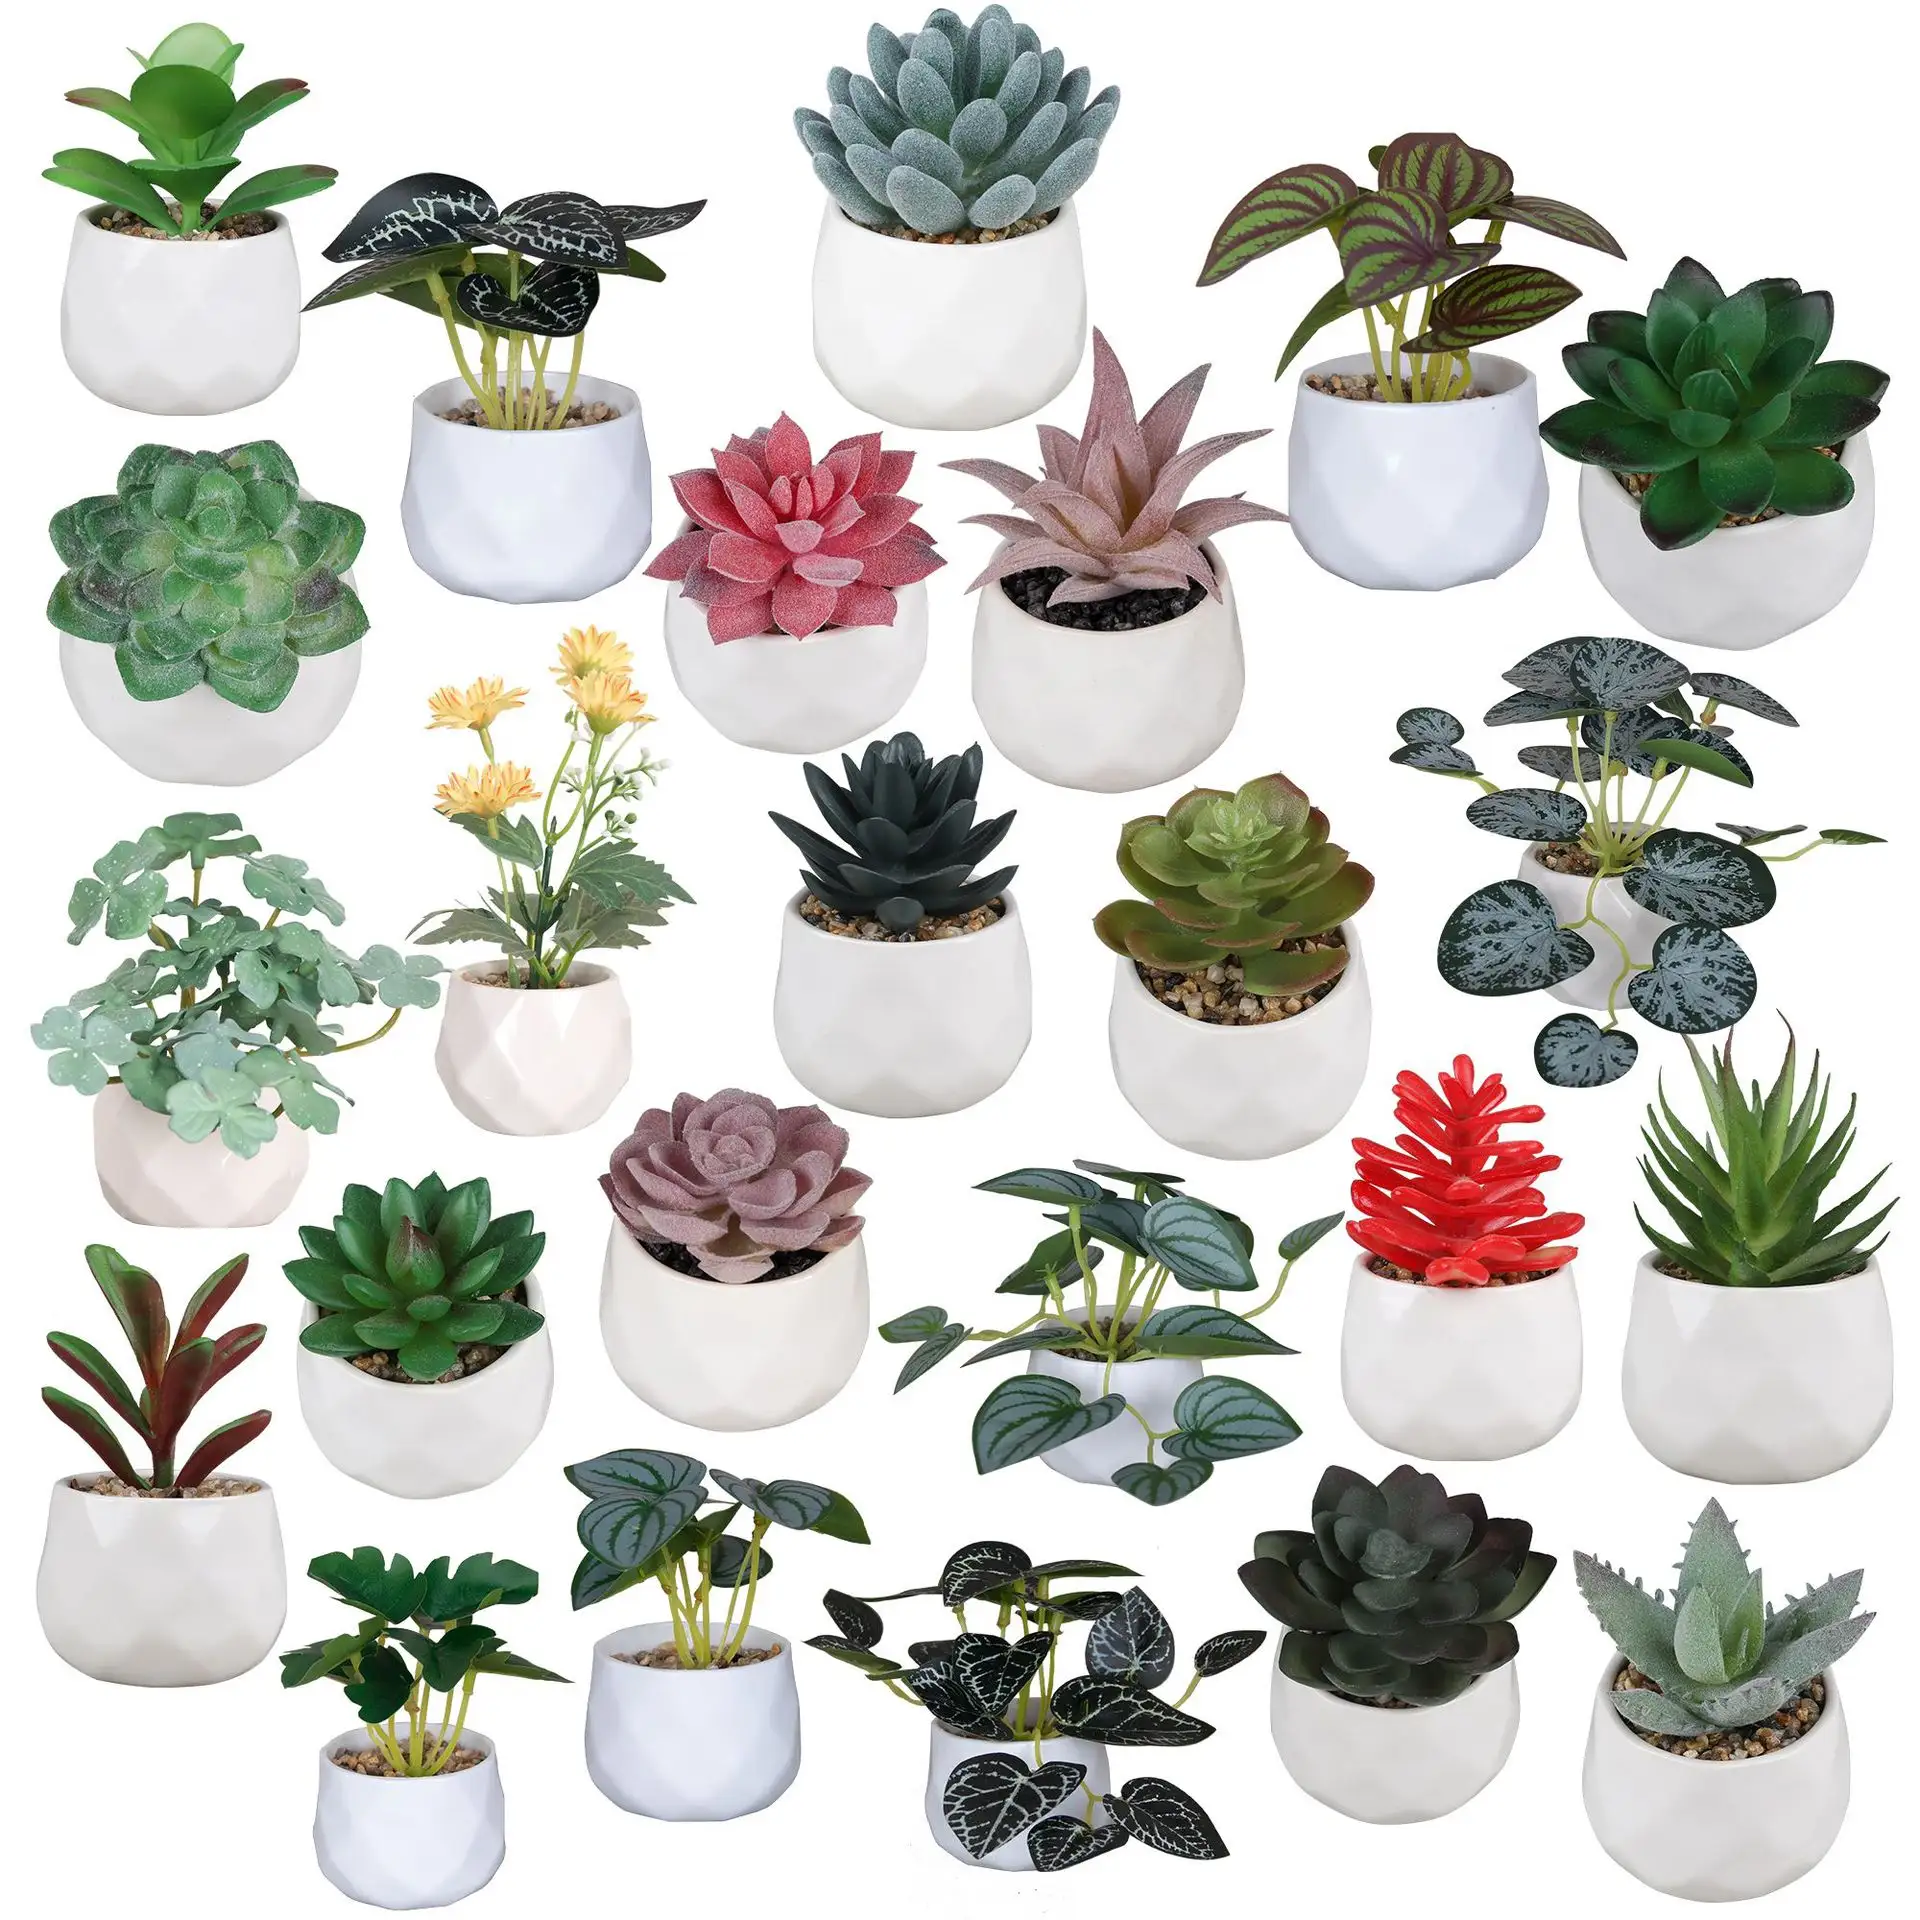 Wholesale High Quality Succulents Plants Artificial In Mini White Ceramic Pots Small Fake Succulents Plants